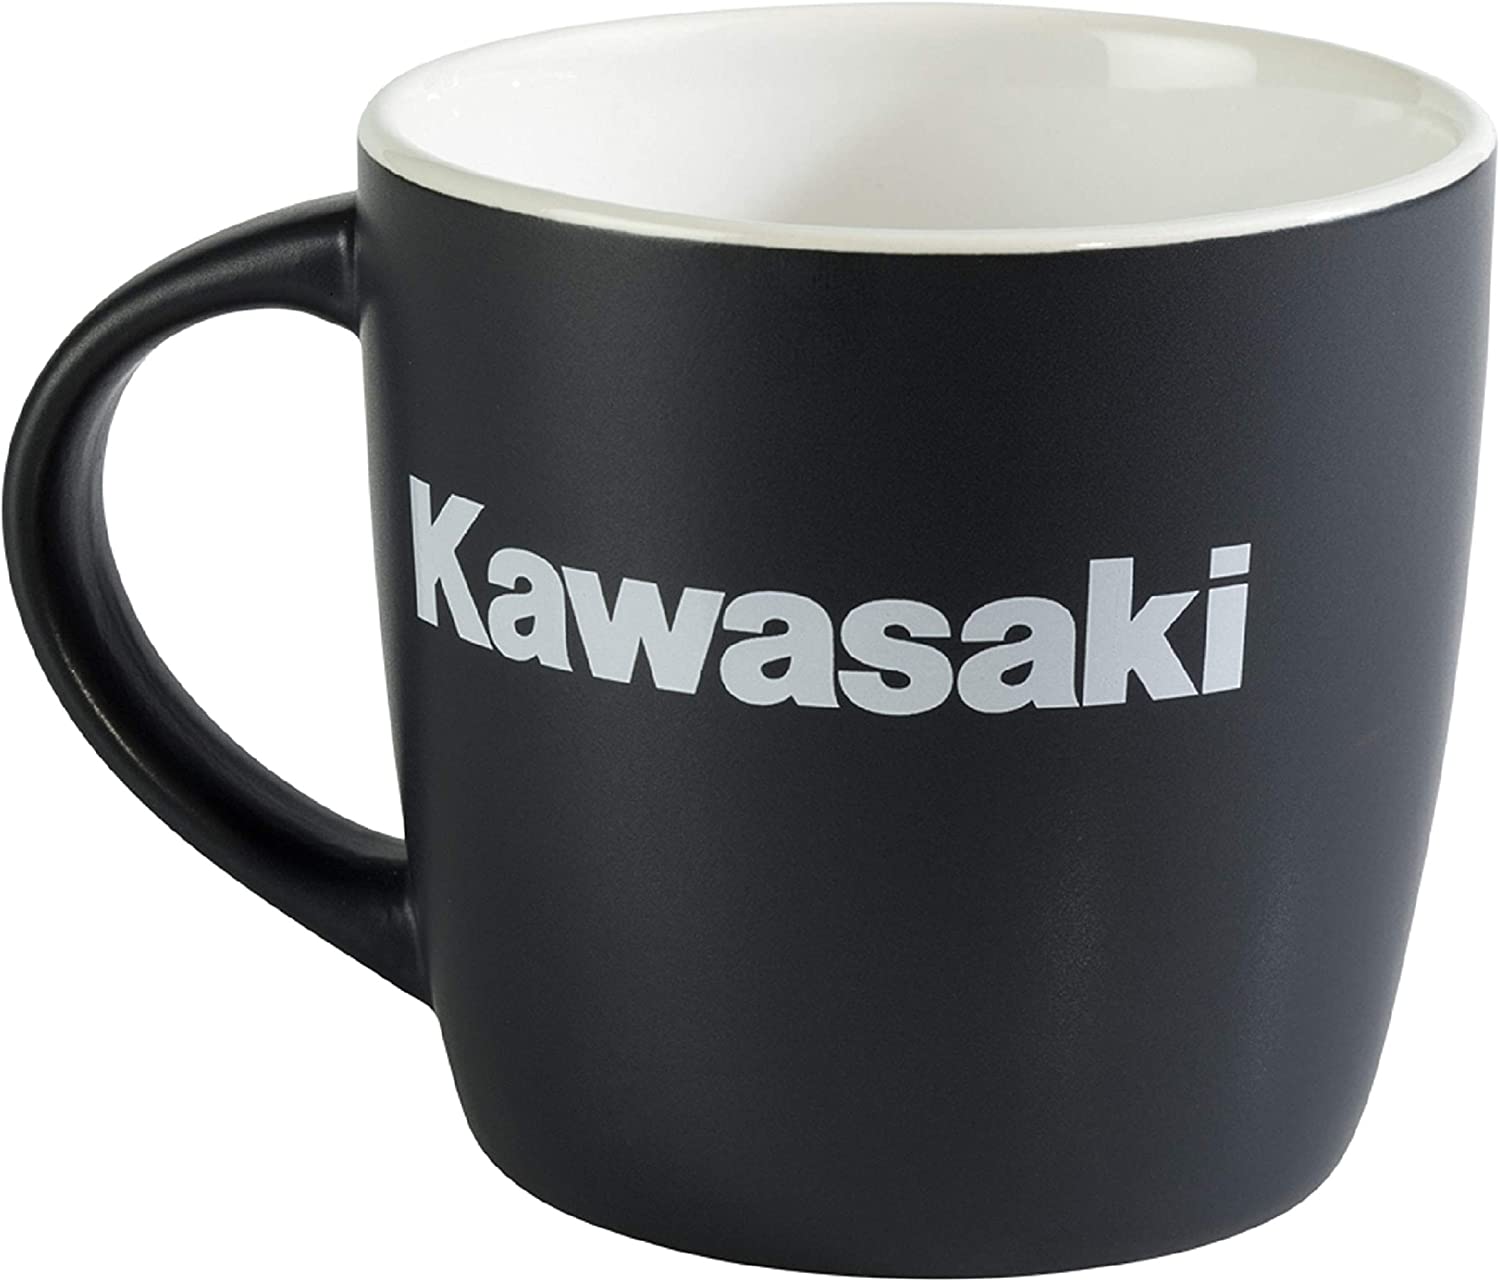 Kawasaki Genuine Team Cup Coffee Tea Mug Black White New 122SPM0023 